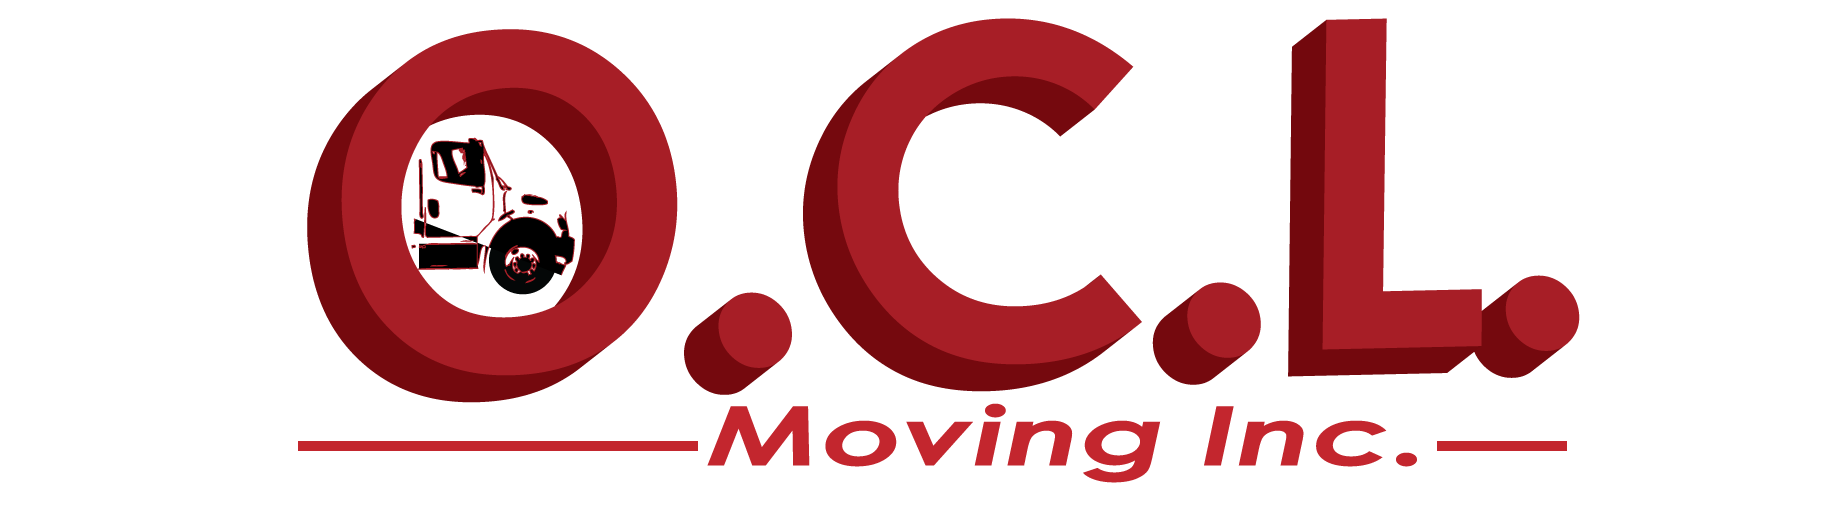 OCL Moving Inc Logo